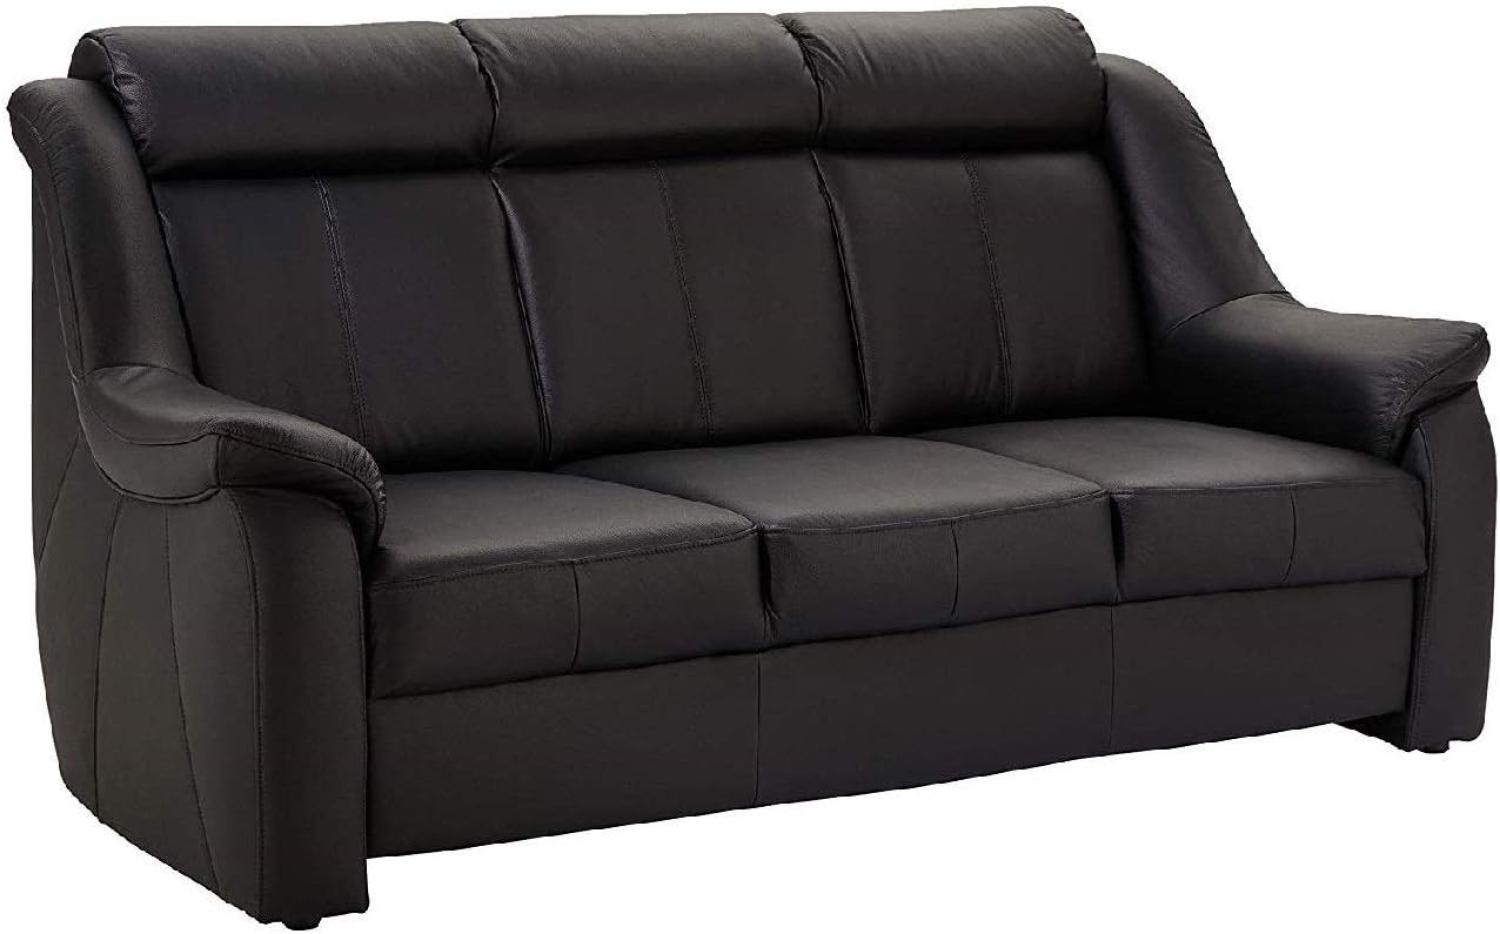 Cavadore 3er Ledersofa Beata moderne 3-sitzige Couch in Leder, Echtleder, schwarz, 188 x 98 x 92 cm Bild 1